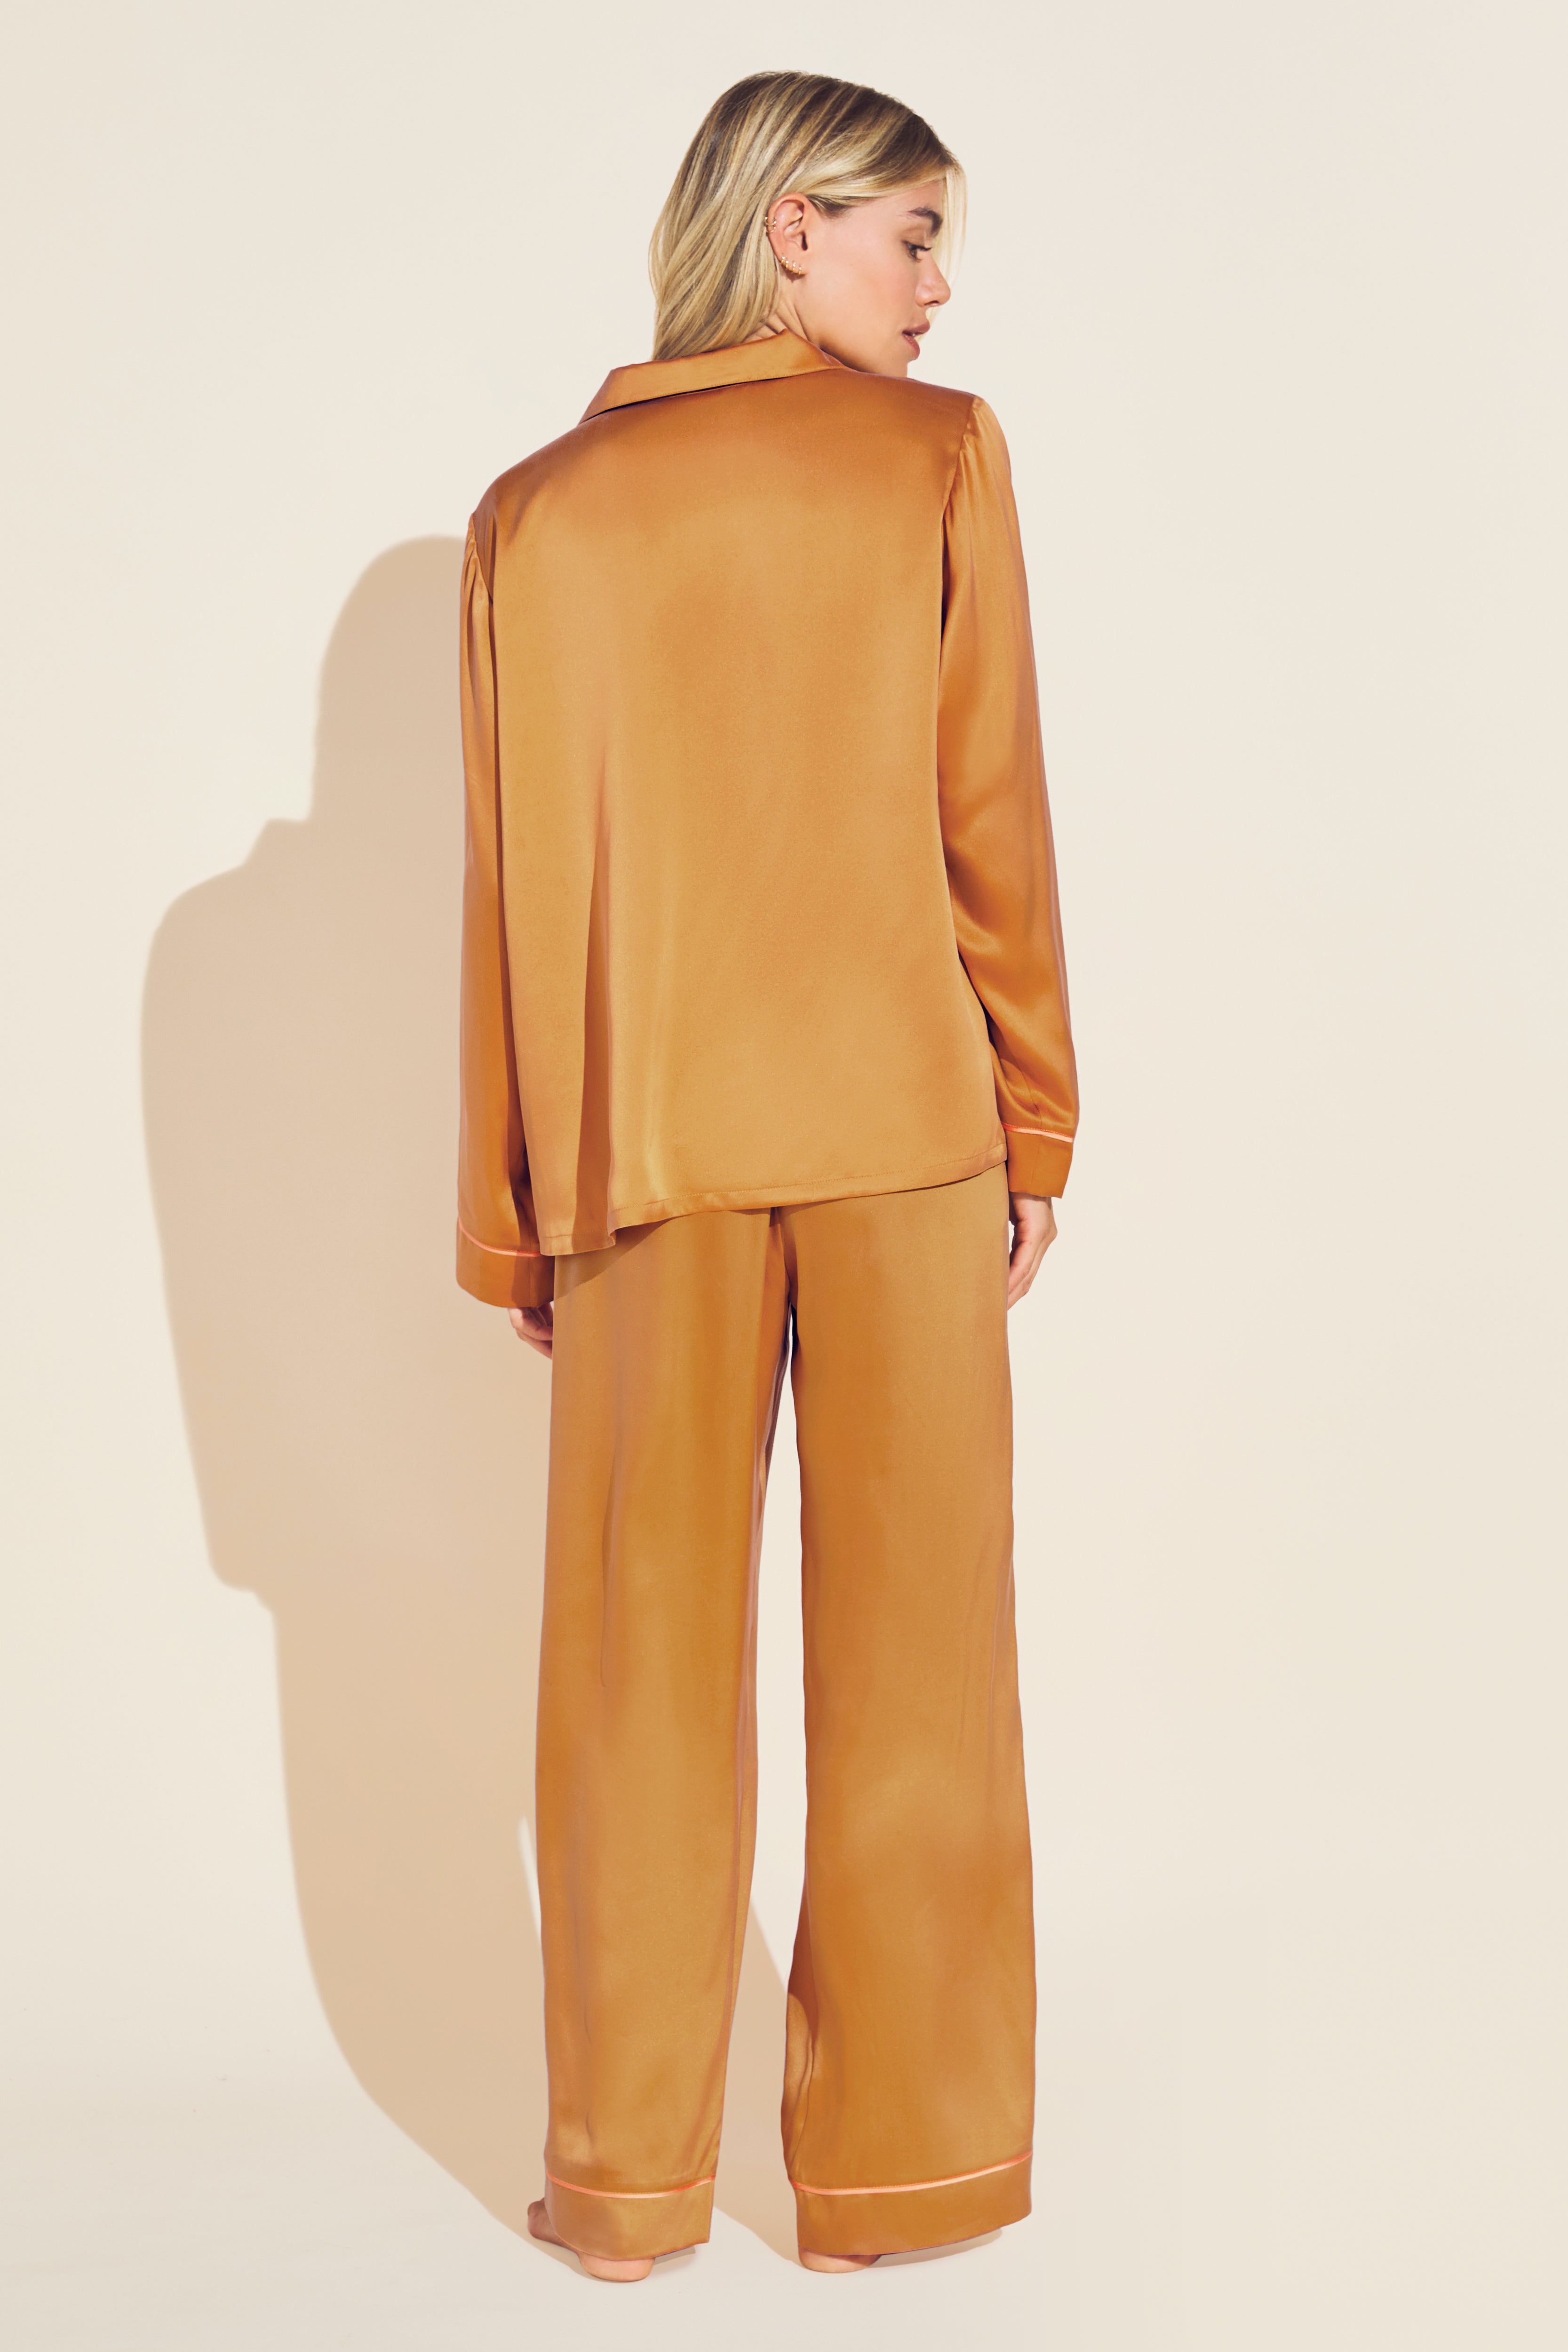 Inez Washable Silk Short PJ Set - Caramel/Bright Orange - Eberjey